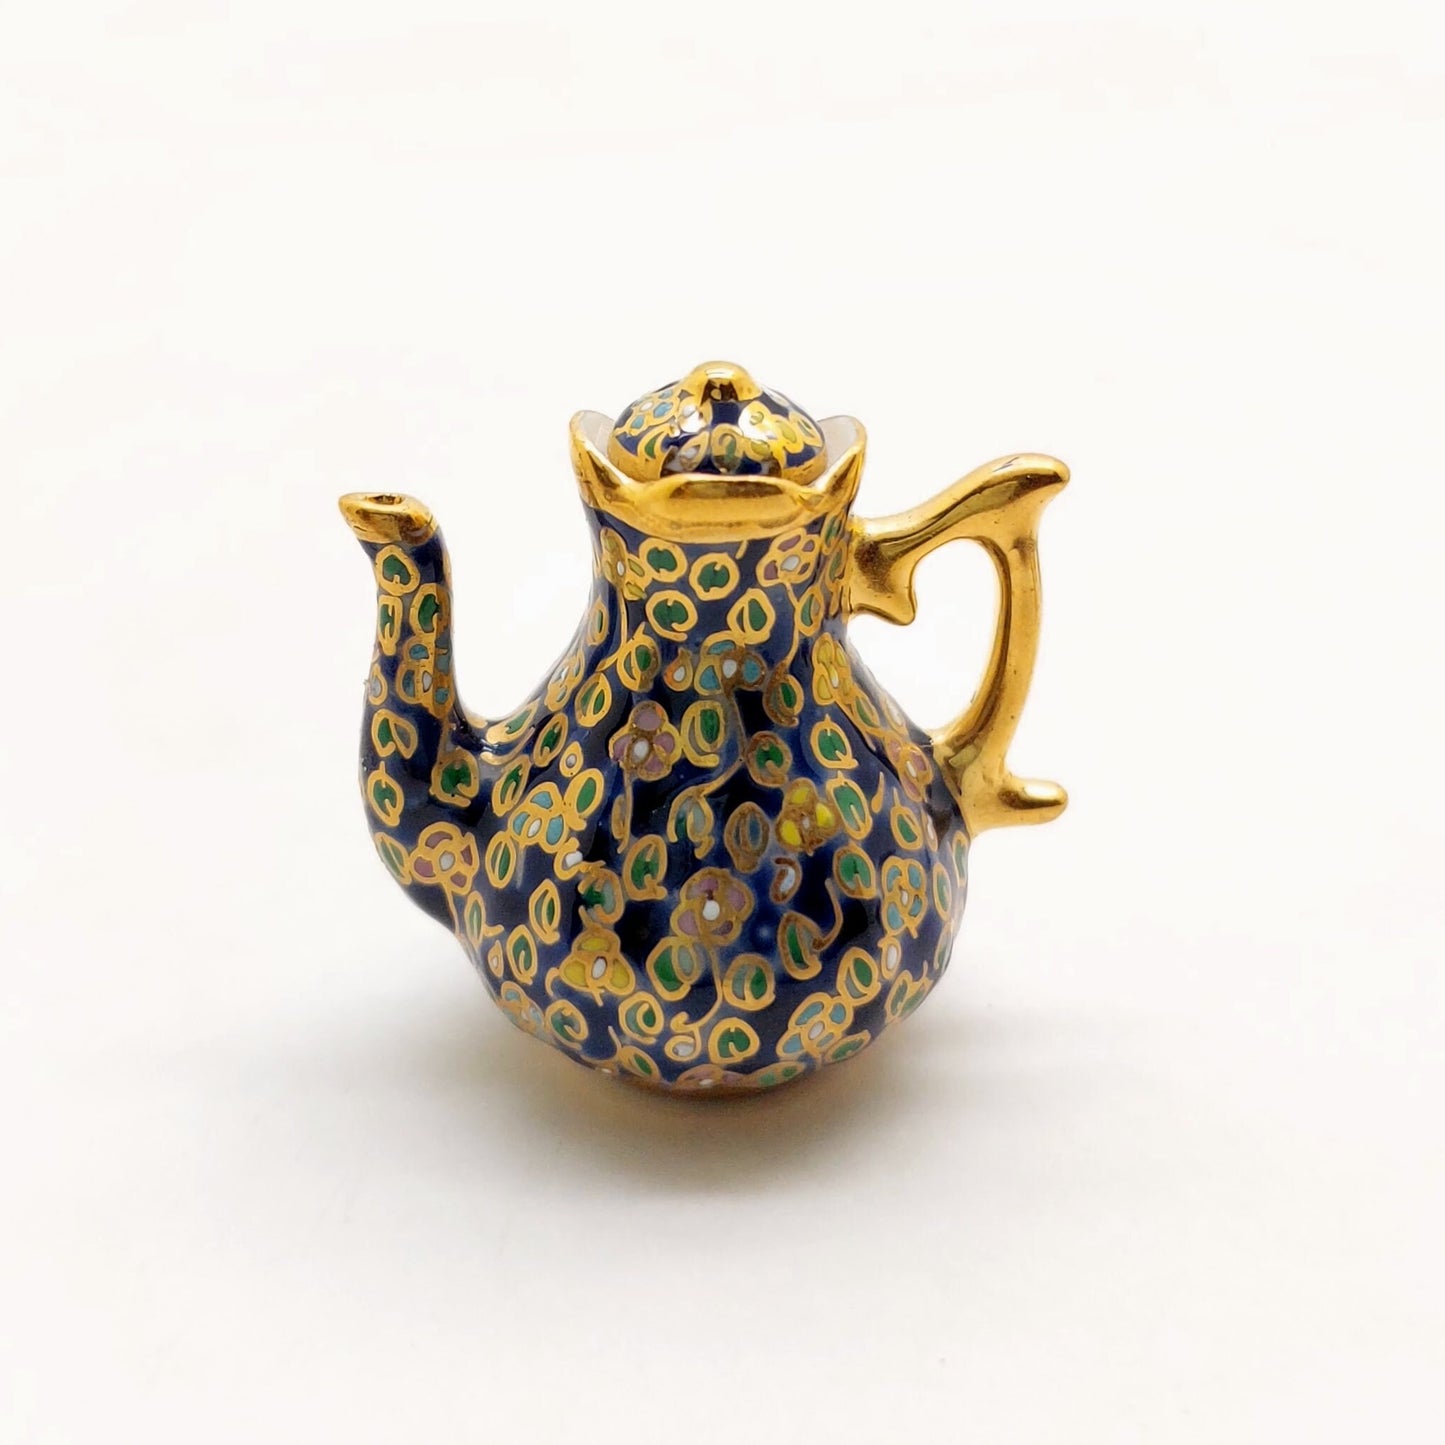 Ceramic Porcelain Miniature Coffee & Teapot Set, Benjarong patterns Golden Dots, Dollhouse Decoration, Gift for Coffee Tea Lovers